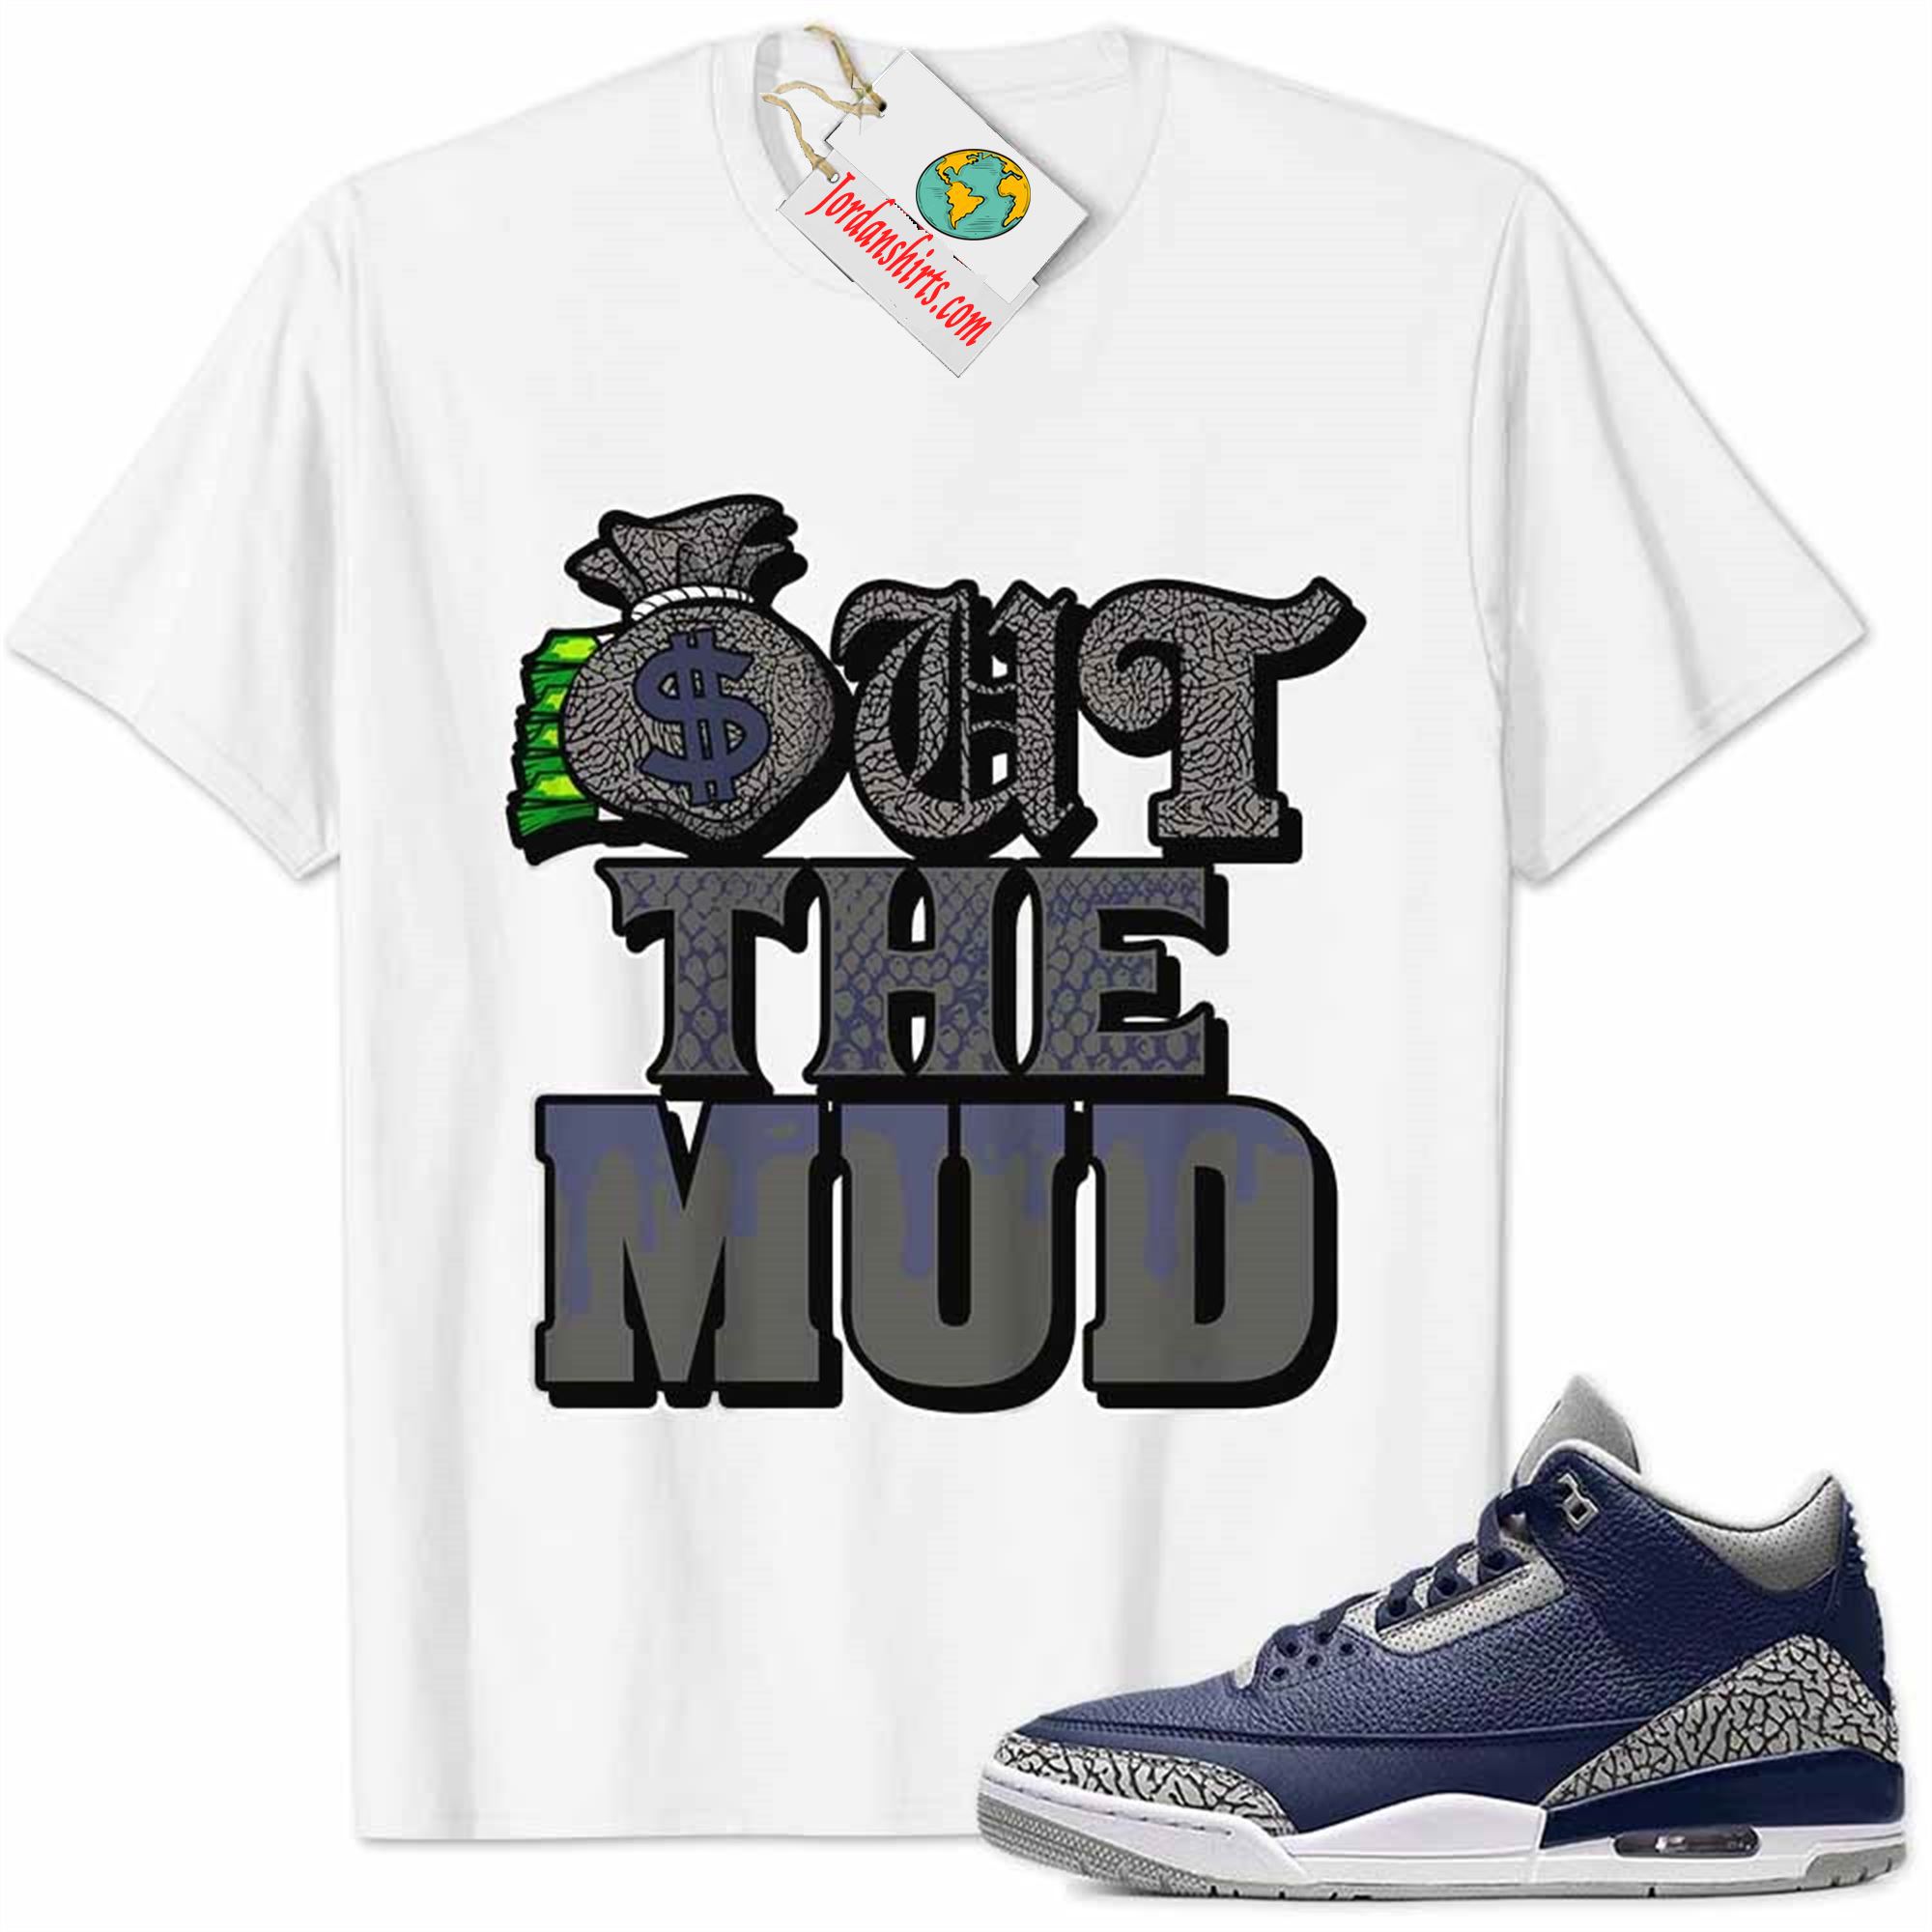 Jordan 3 Shirt, Jordan 3 Georgetown Midnight Navy Shirt Out The Mud Money Bag White Full Size Up To 5xl